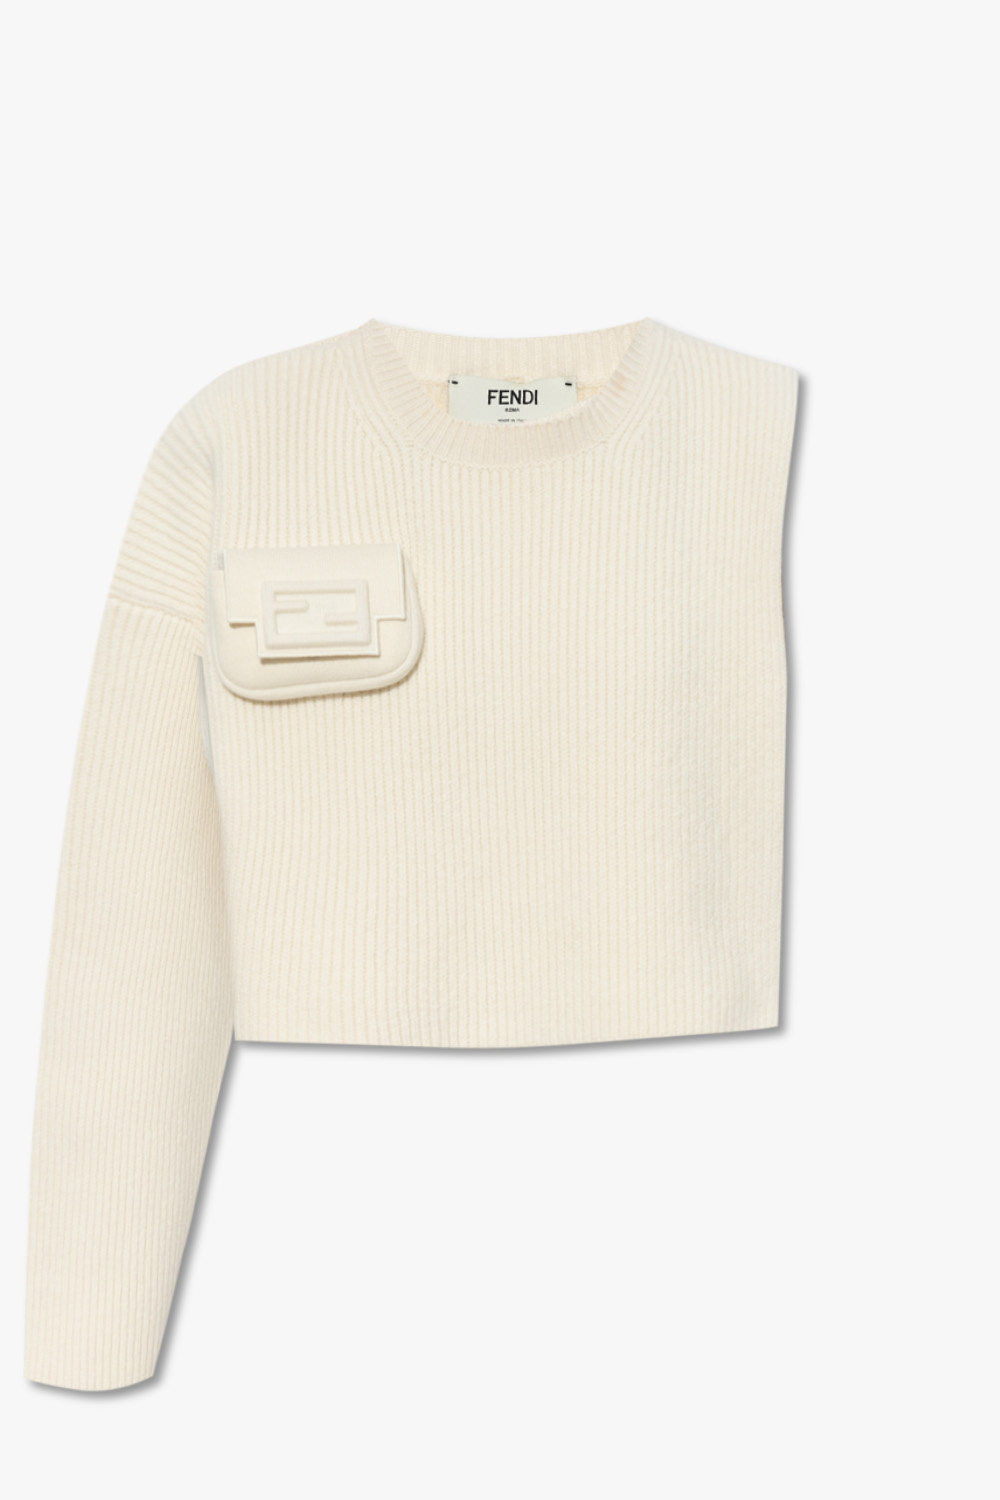 fendi bag Asymmetric sweater with pocket